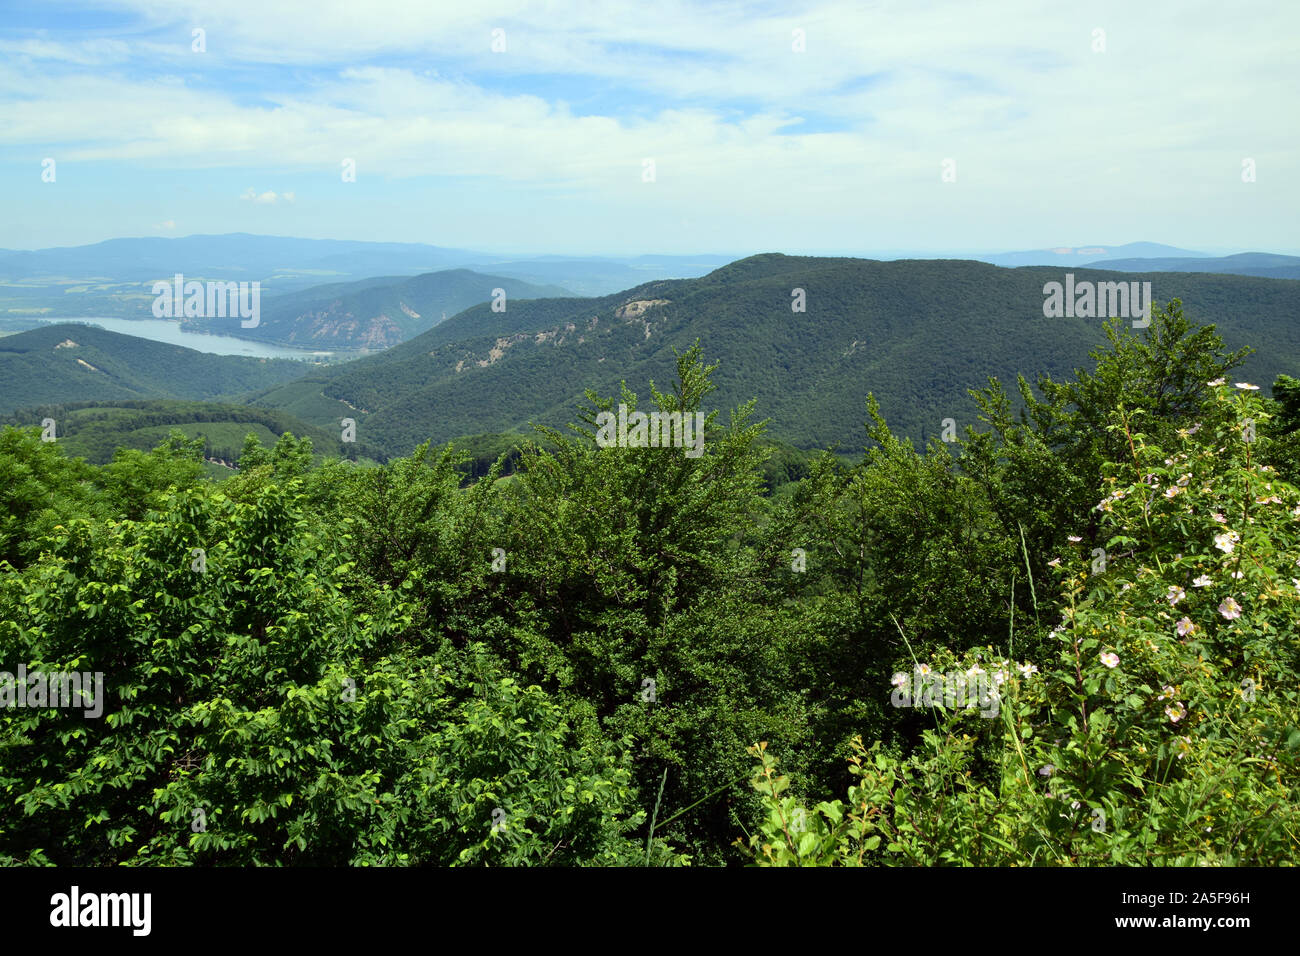 Pilis mountains, Hungary, Magyarország, Europe Stock Photo